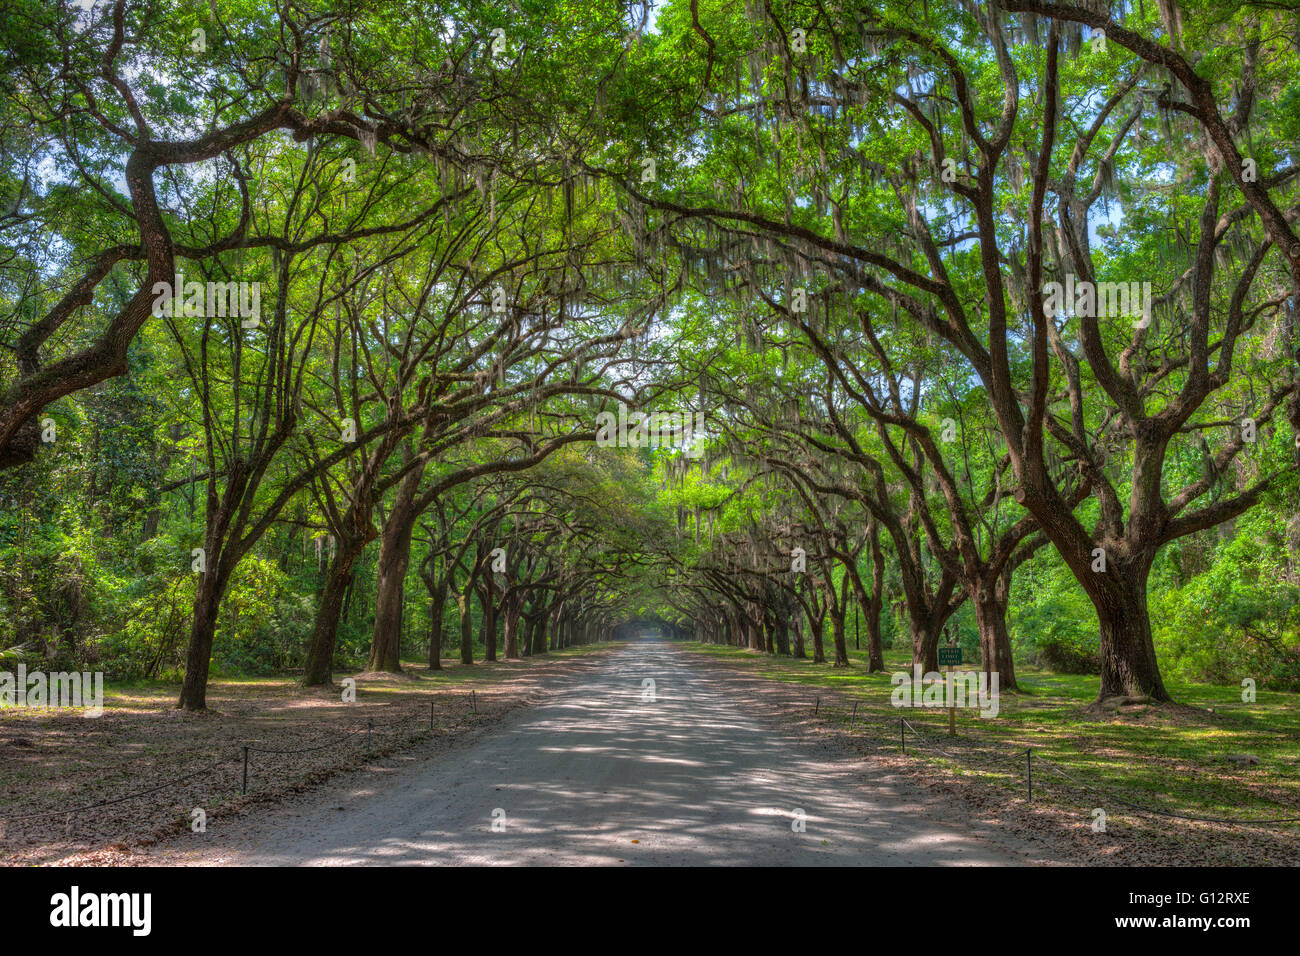 Live Oak trees draped with Spanish Moss line the entrance road to Wormsloe Plantation in Savannah, Georgia. Stock Photo